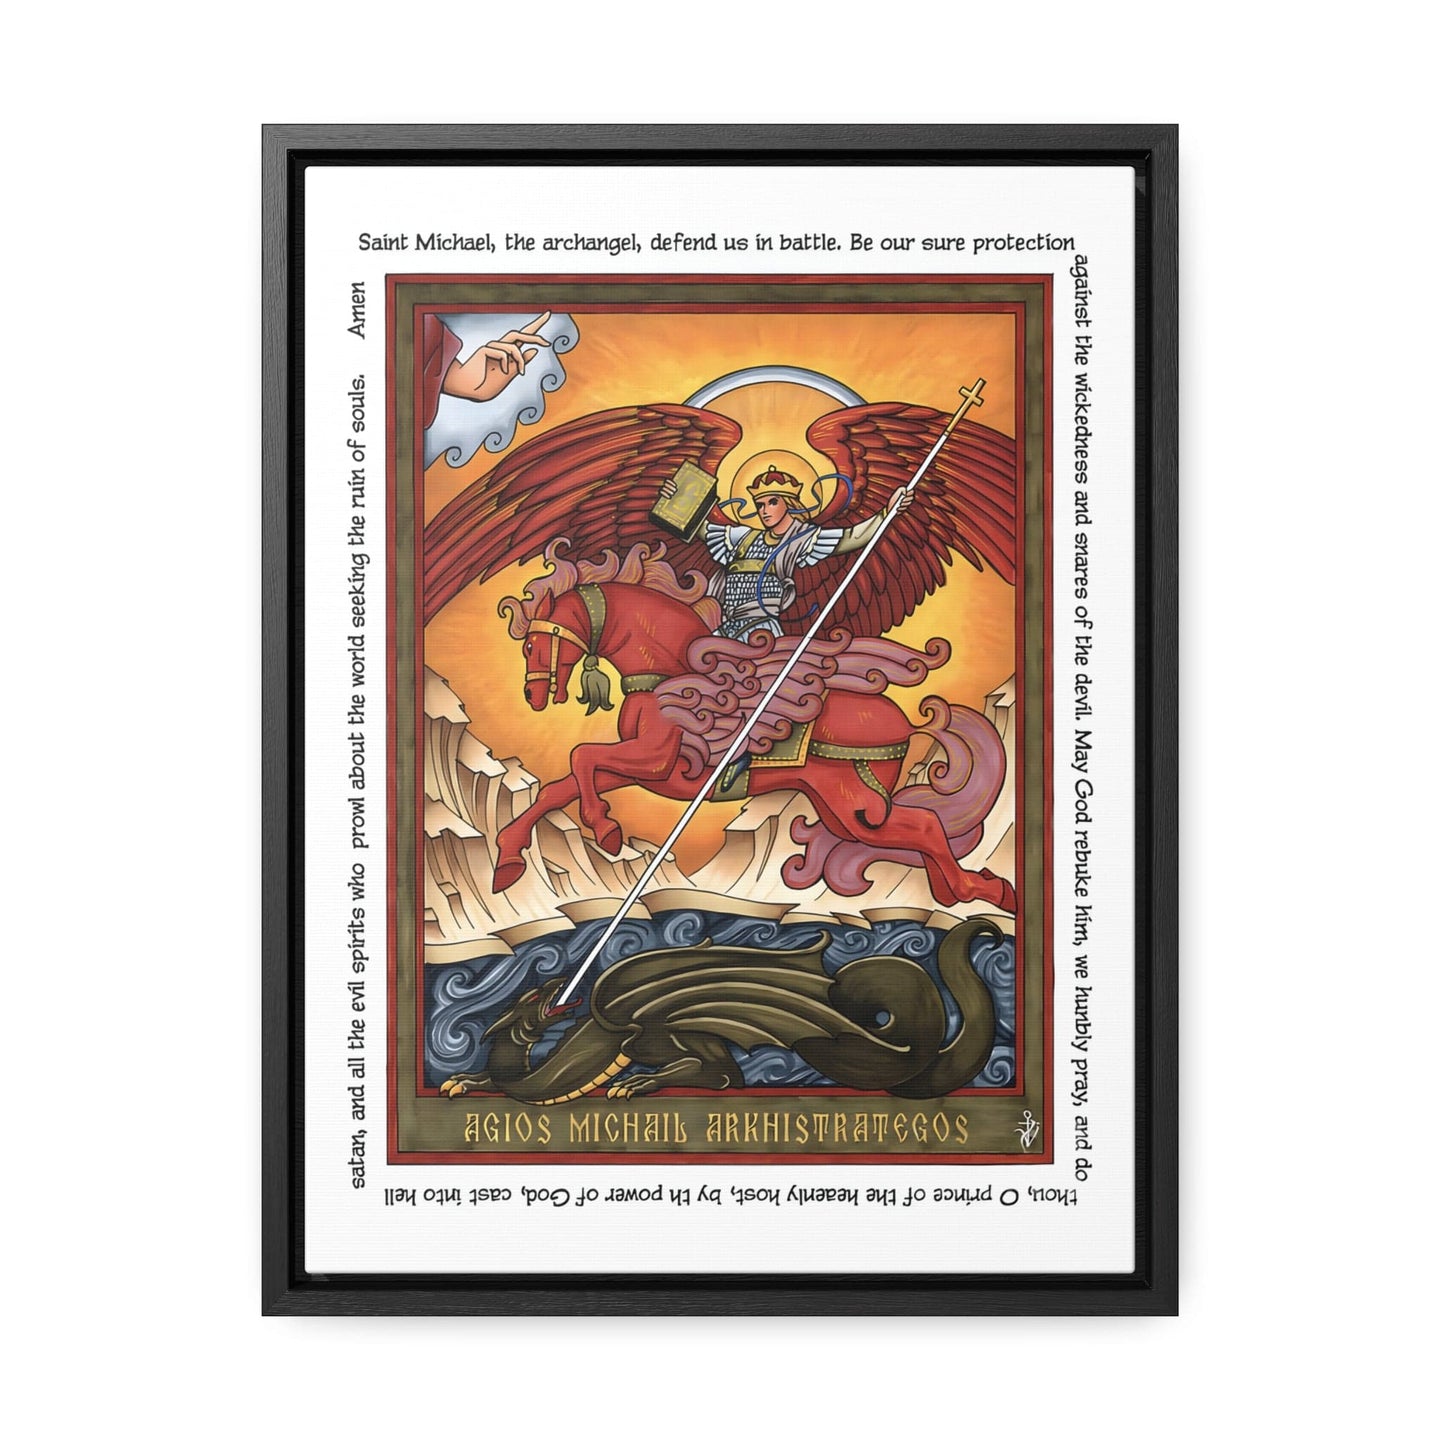 Saint Michael the Archangel Fighting the Dragon Premium Gallery Canvas Wall Print